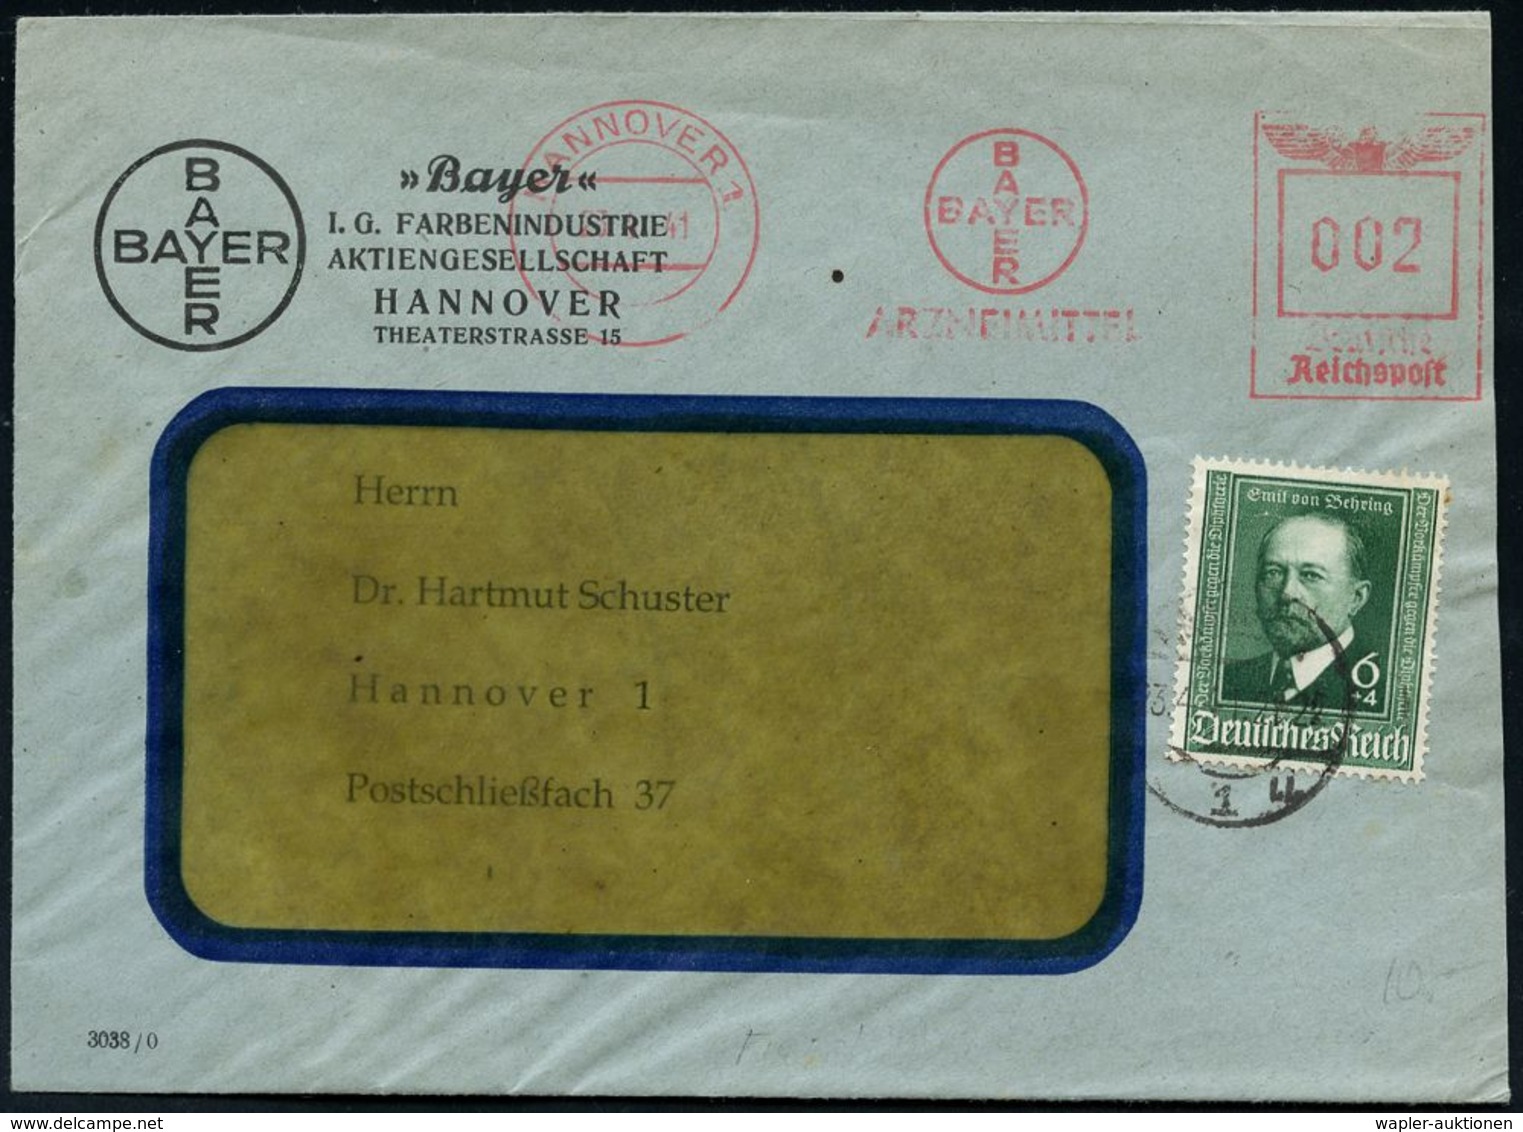 I.-G.-FARBEN INDUSTRIE, TOCHTERFIRMEN & NACHFOLGER : HANNOVER 1/ BAYER/ ARZNEUMITTEL 1941 (23.4.) AFS 002 Pf. (Firmen-Lo - Chimica